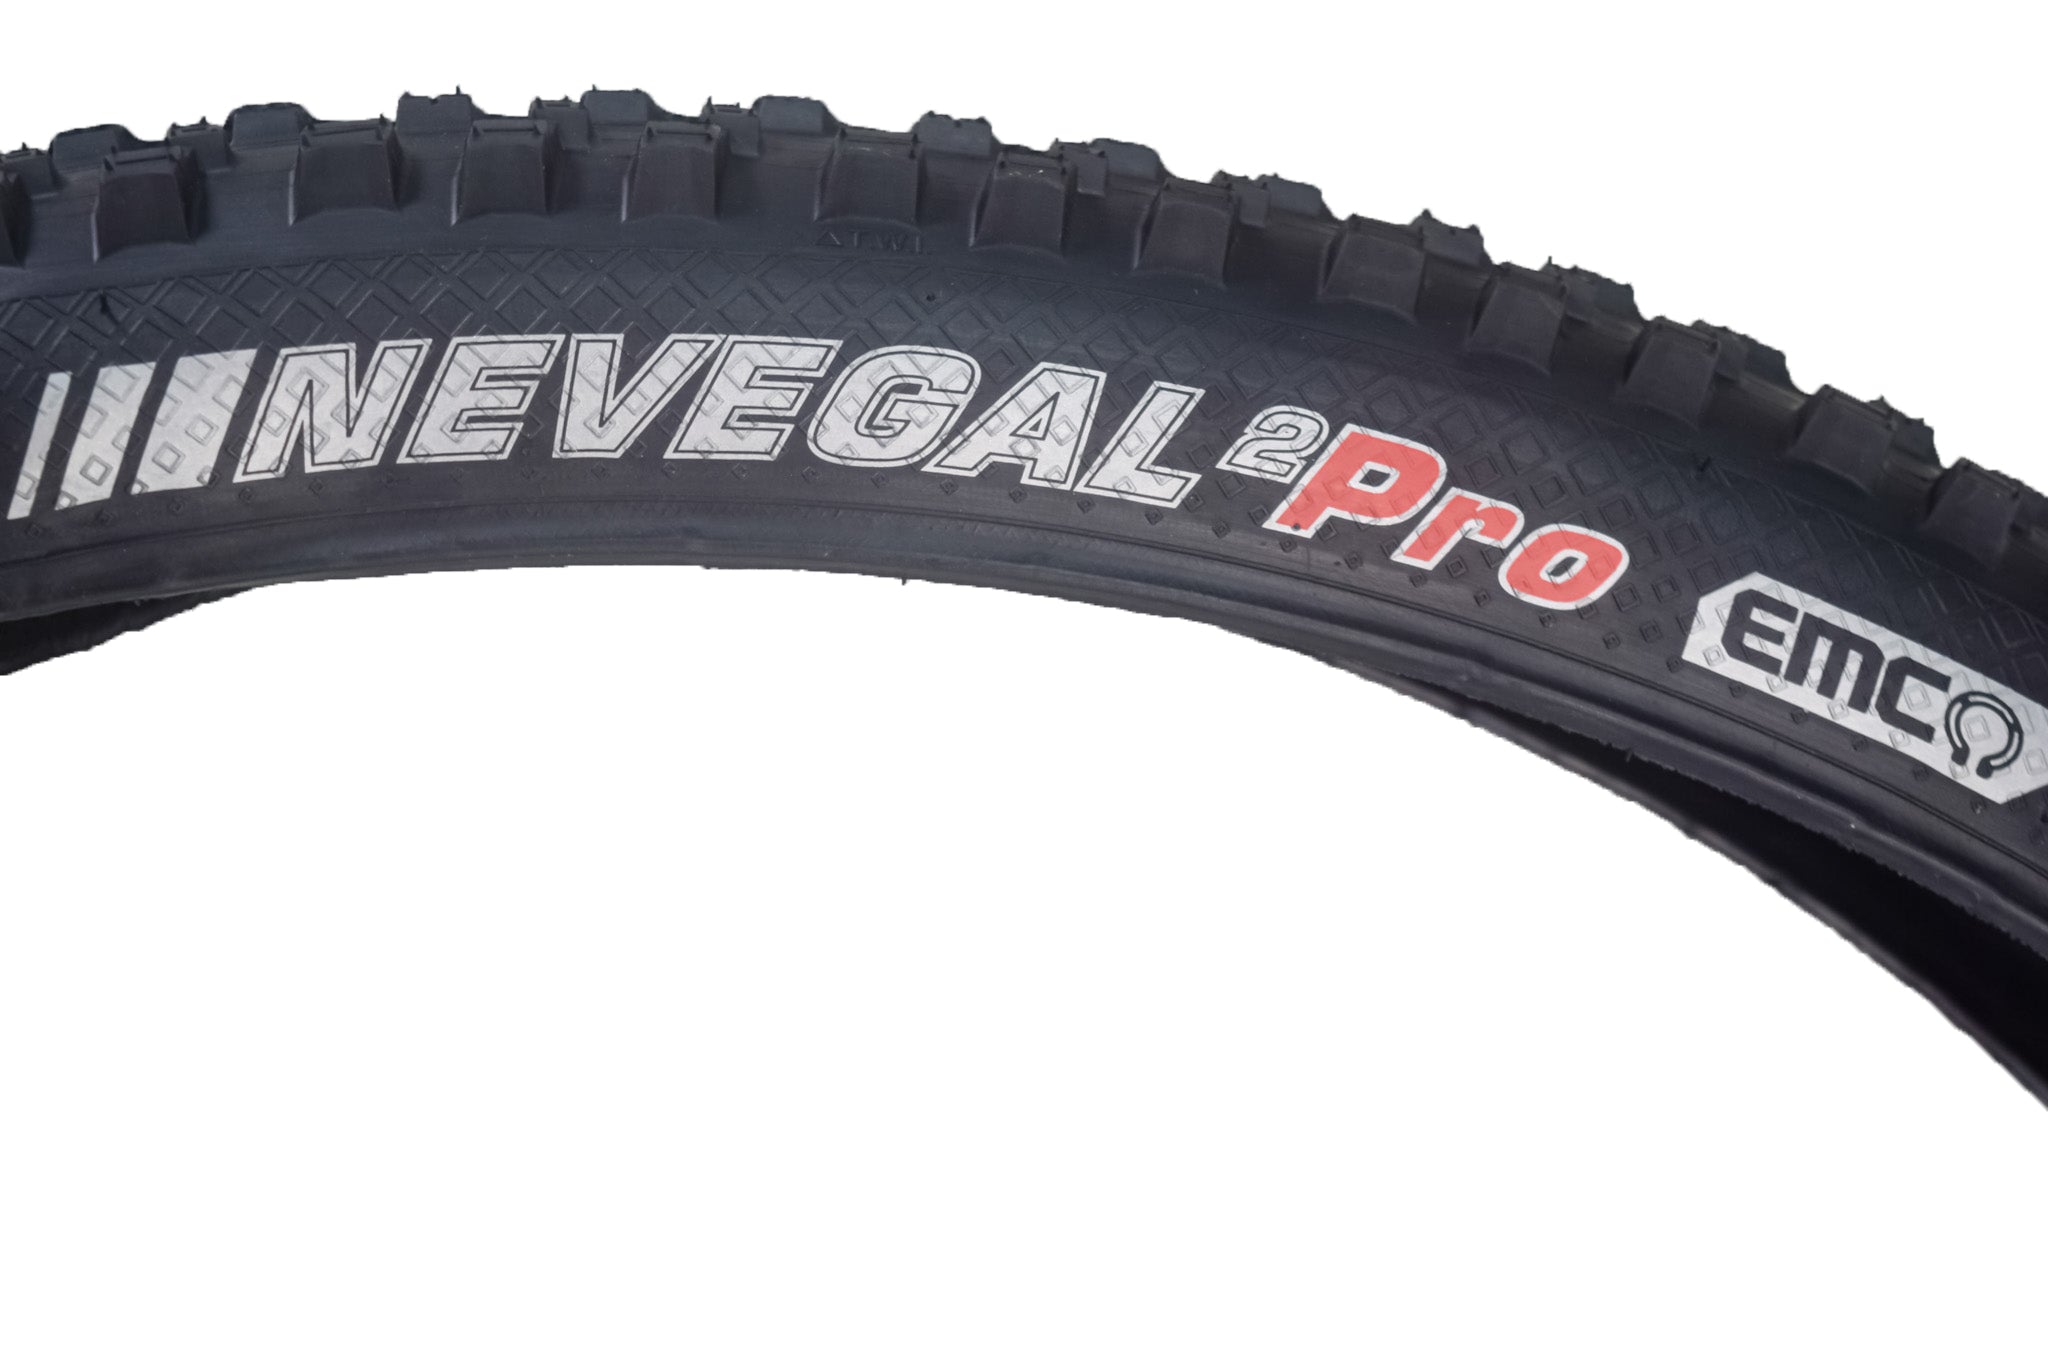 Nevegal 2 EMC 60tpi 29x2.60 29x2.40 E-Bike Trail Tire & Bottle Opener (Two Pack)